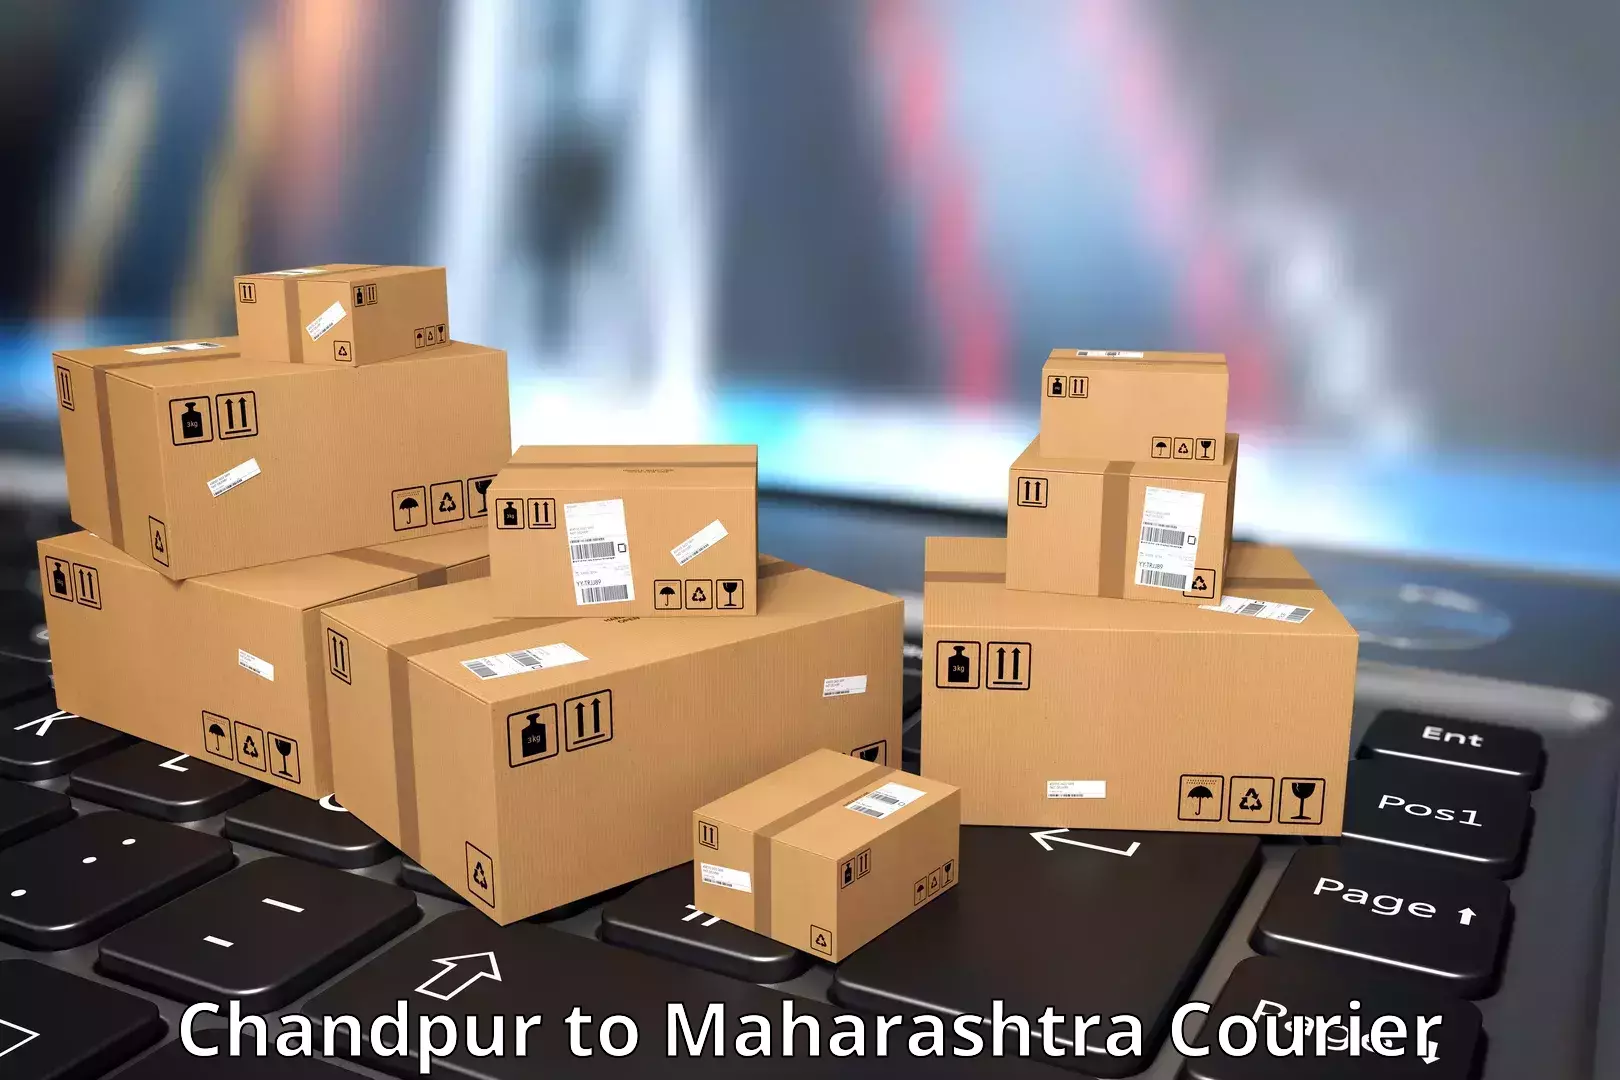 High-capacity parcel service Chandpur to Navi Mumbai